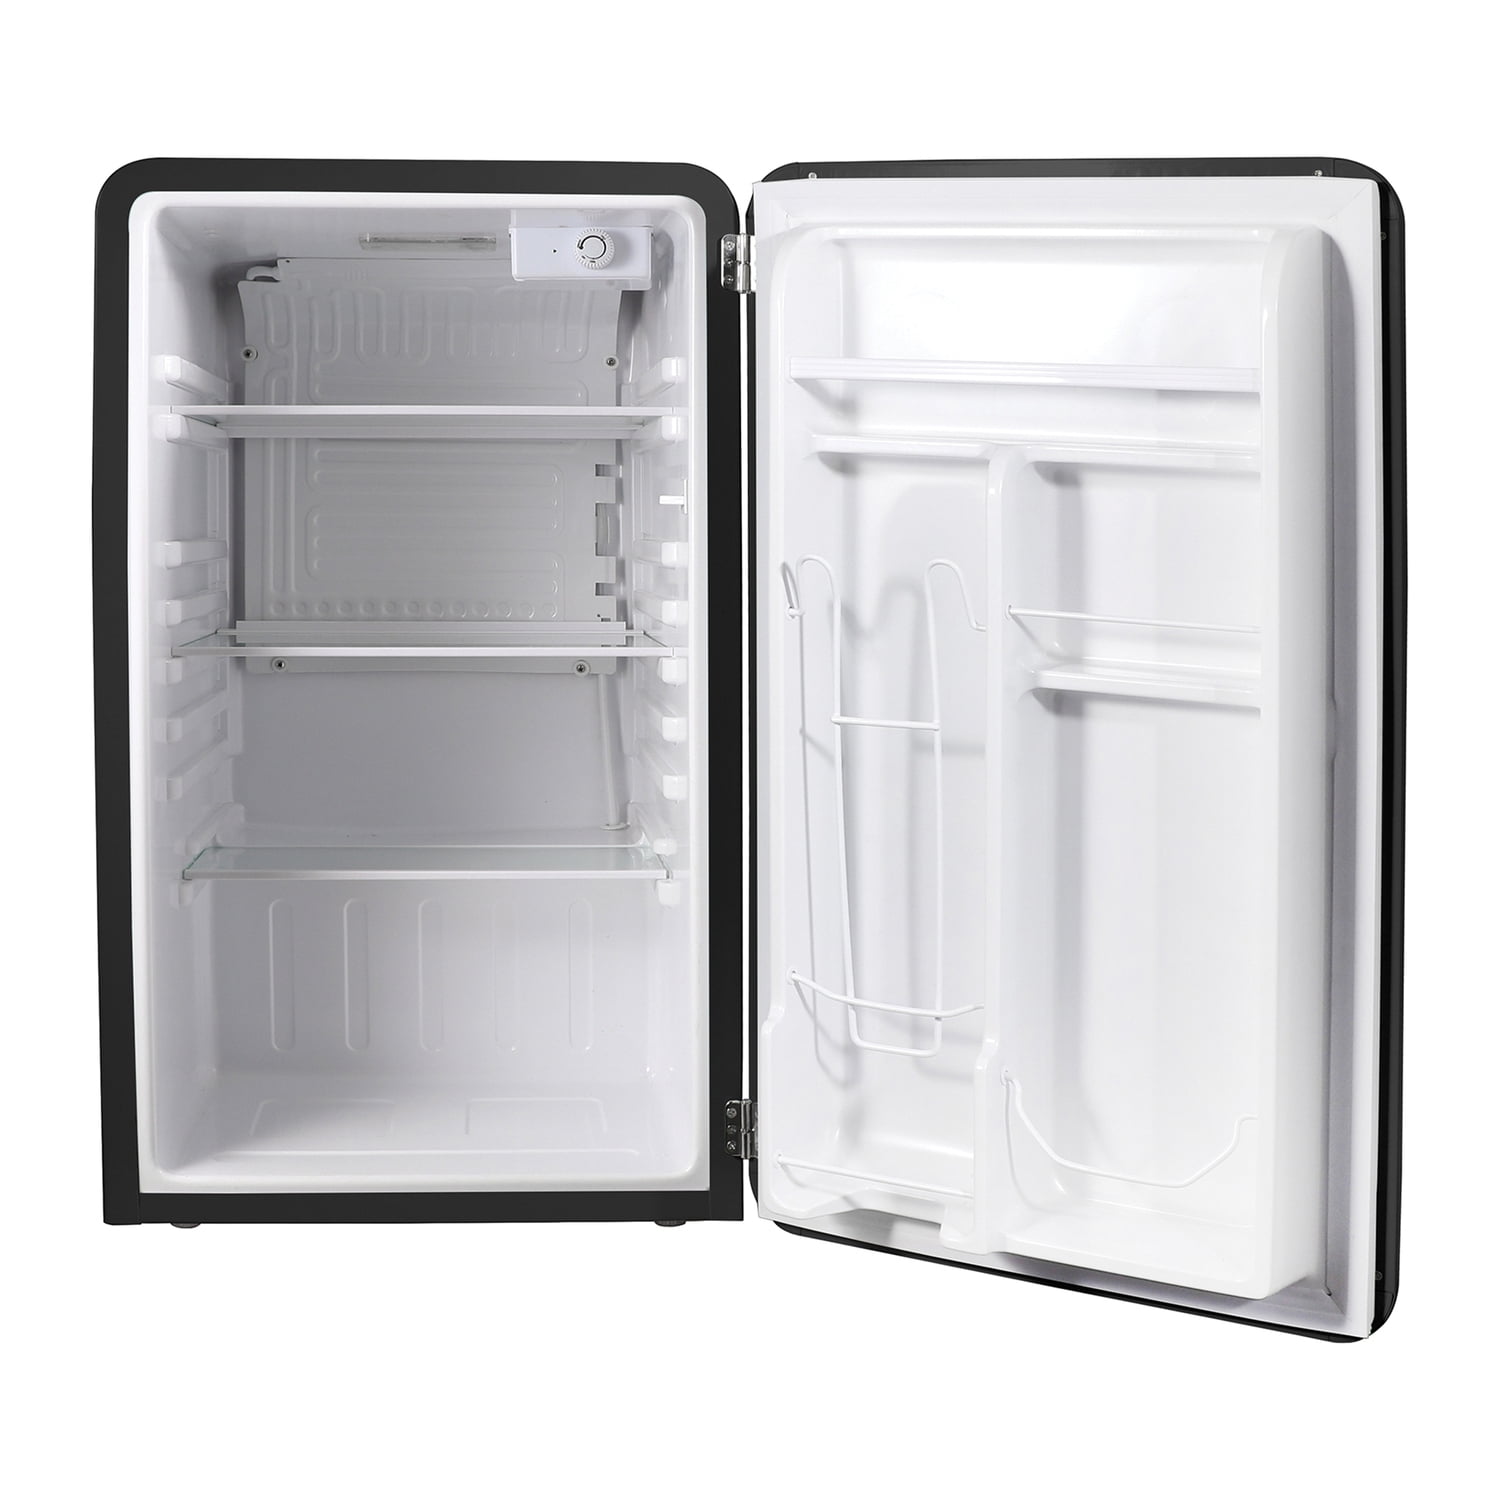  Magic Chef MCR32CHW Compact Refrigerator, White : Home & Kitchen